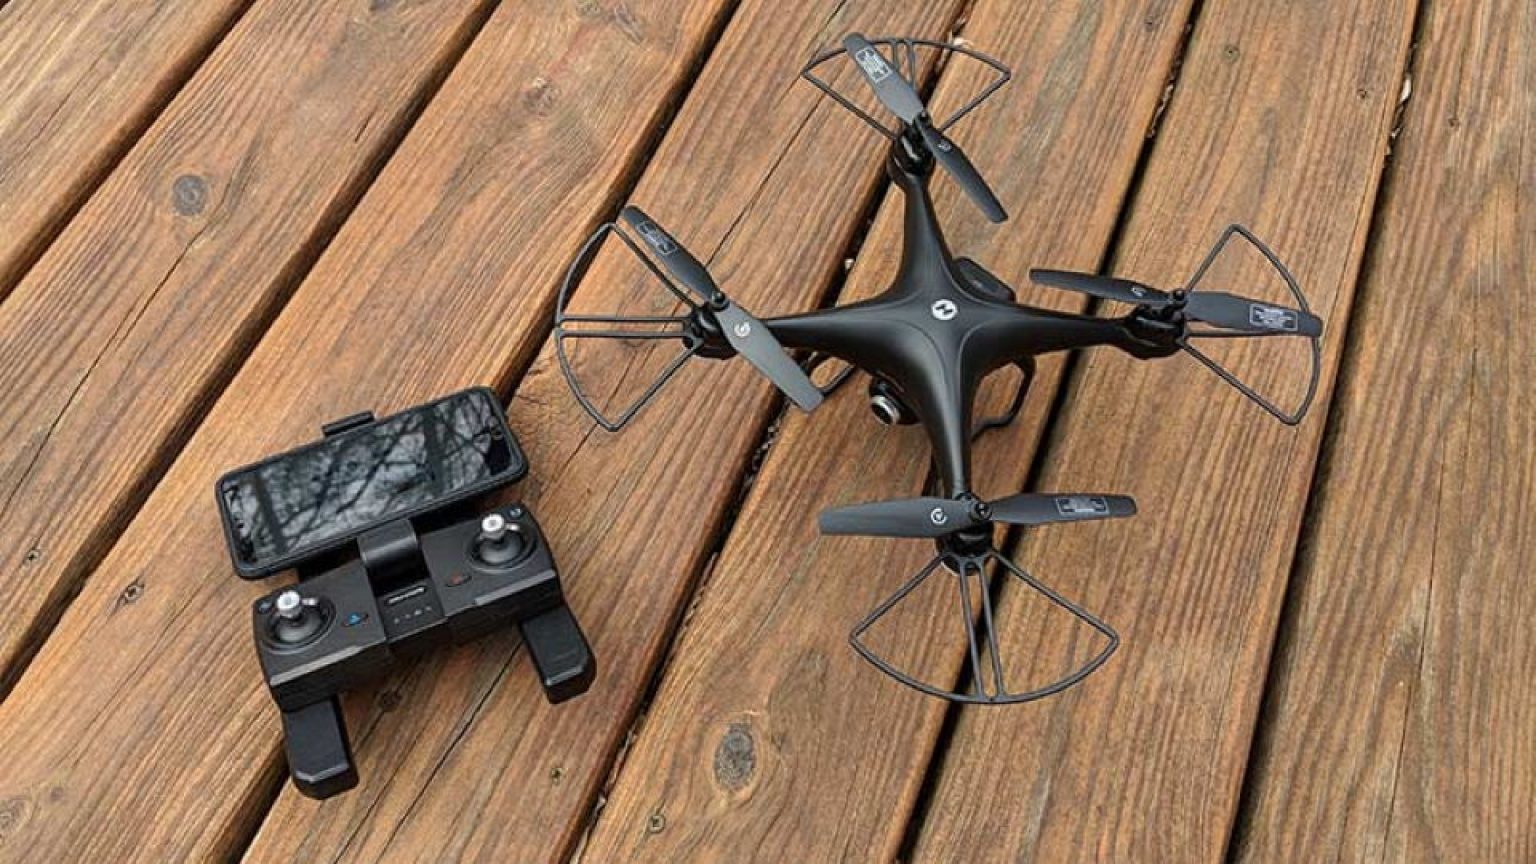 Top 8 Best Holy Stone Drones for Beginners Buyer's Guide UAV Adviser